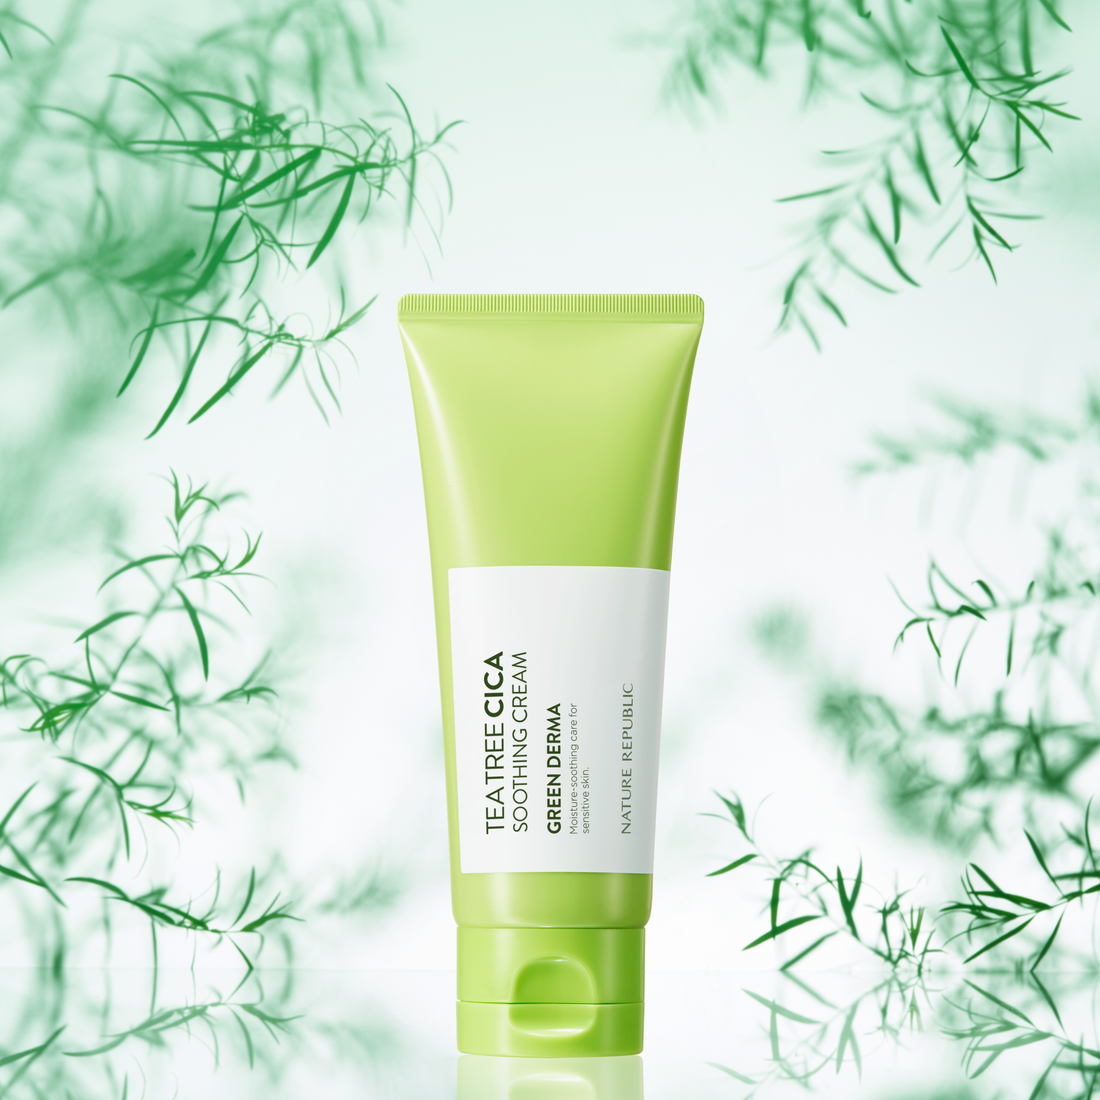 [BHA/PHA] Green Derma Tea Tree Cica Total Set - Foam Cleanser, Big Toner 500ml, Clear Emulsion & Soothing Cream